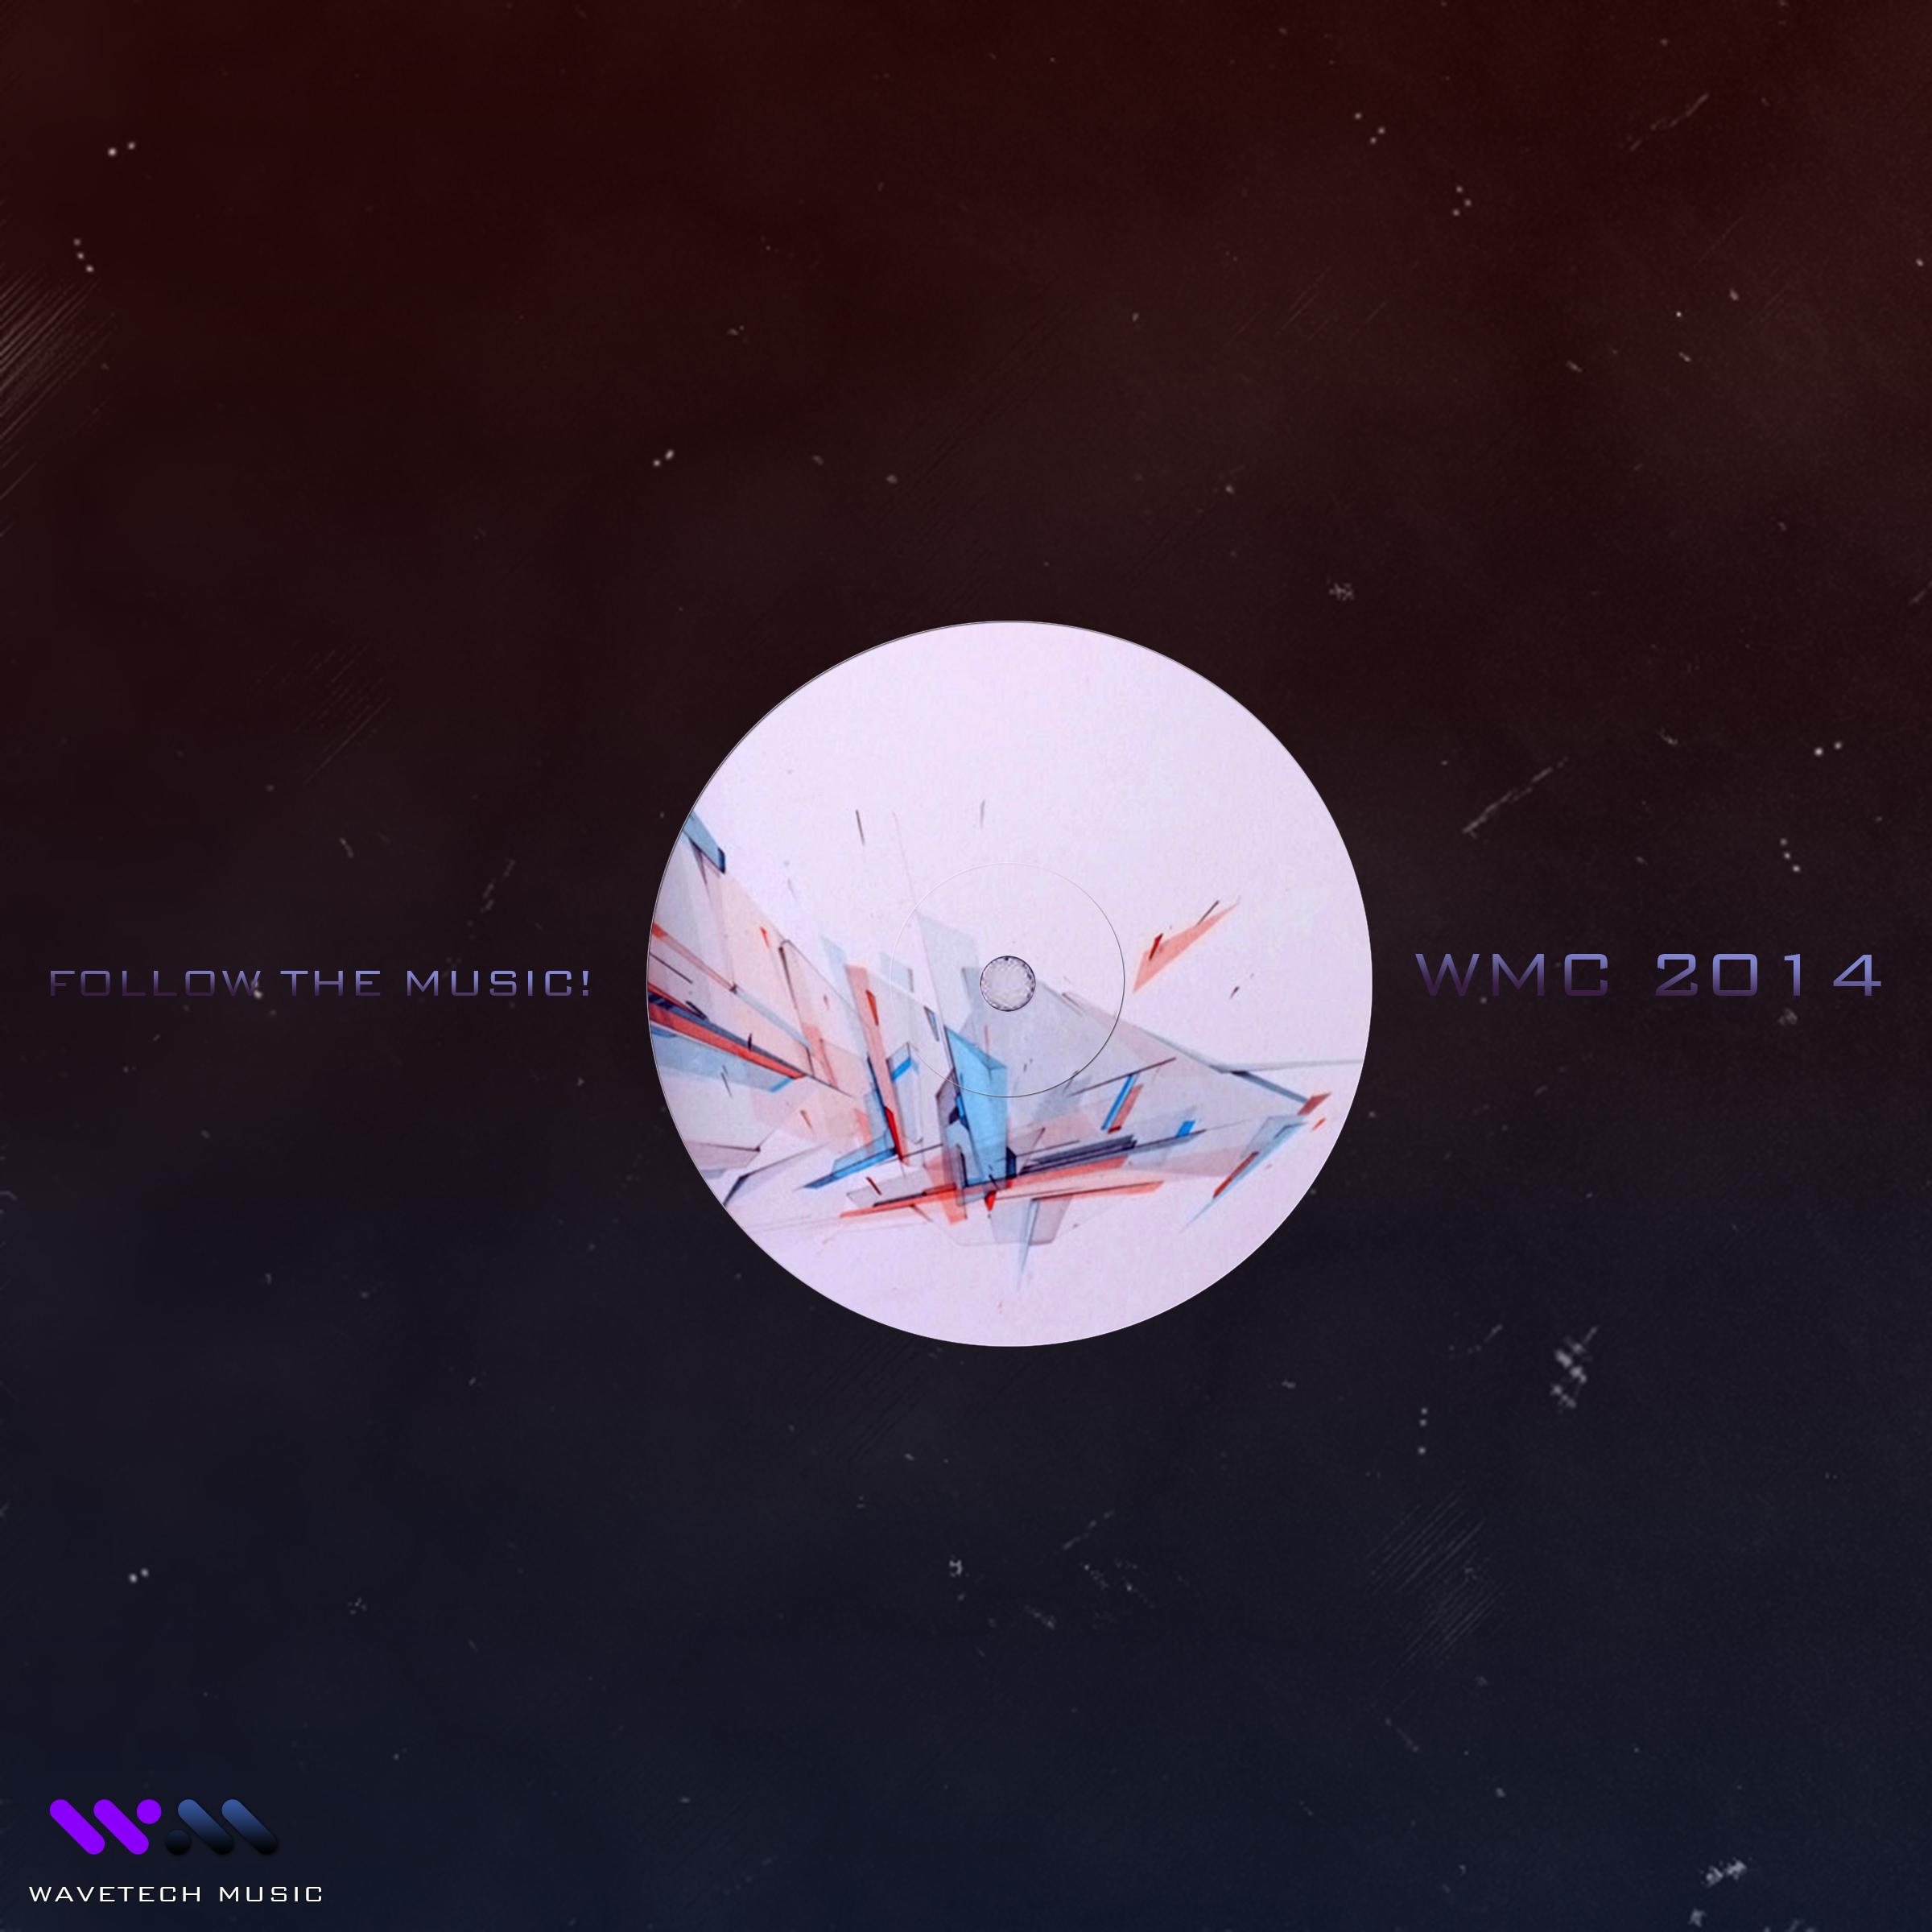 WMC 2014 - Follow the Music!